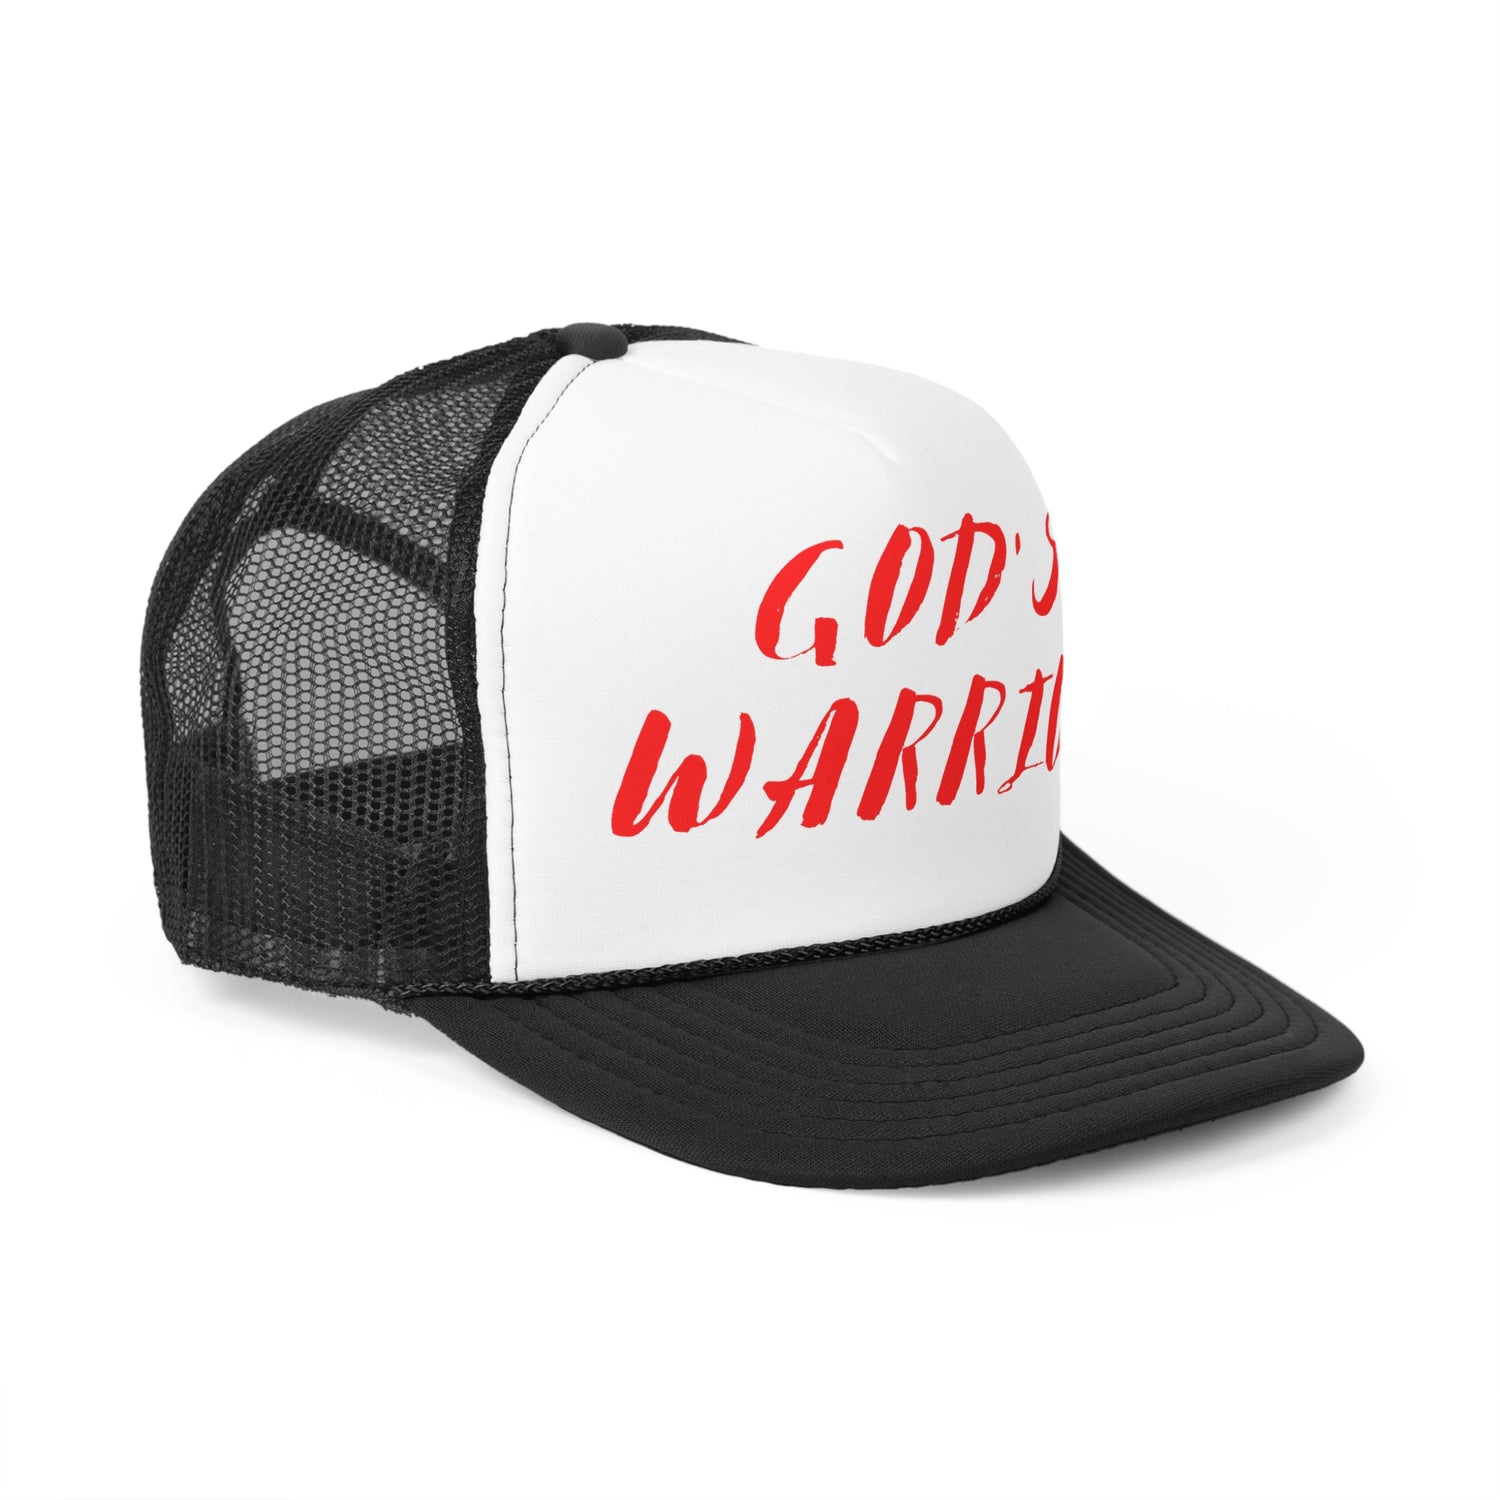 God's Warrior Trucker Cap